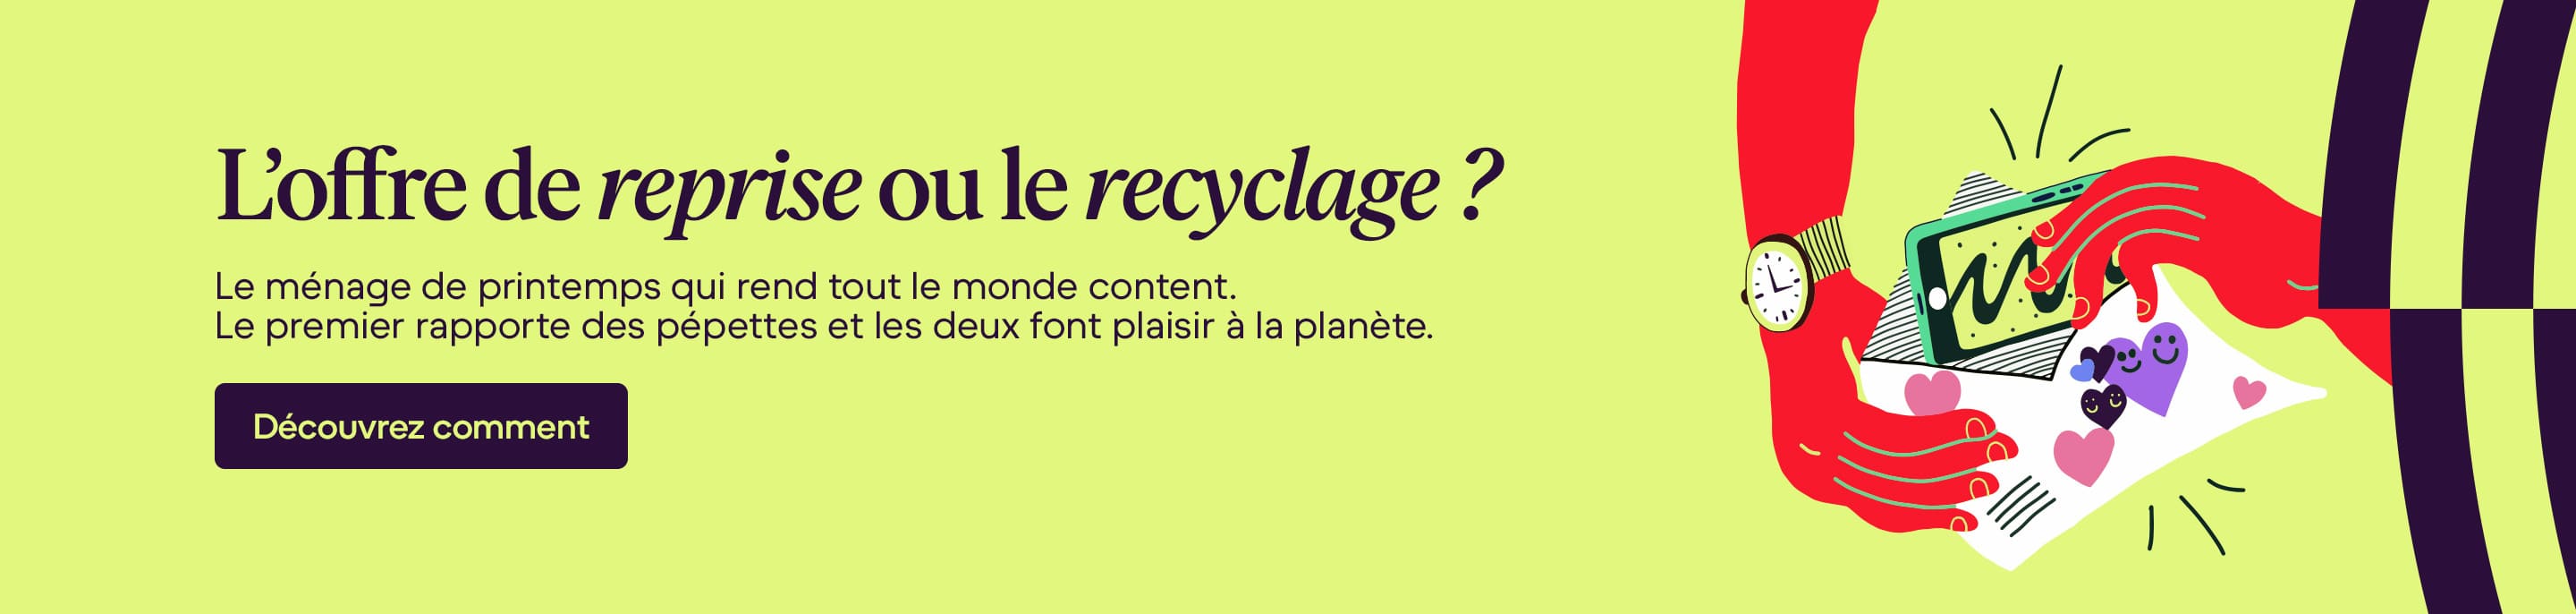 FR - Recycling